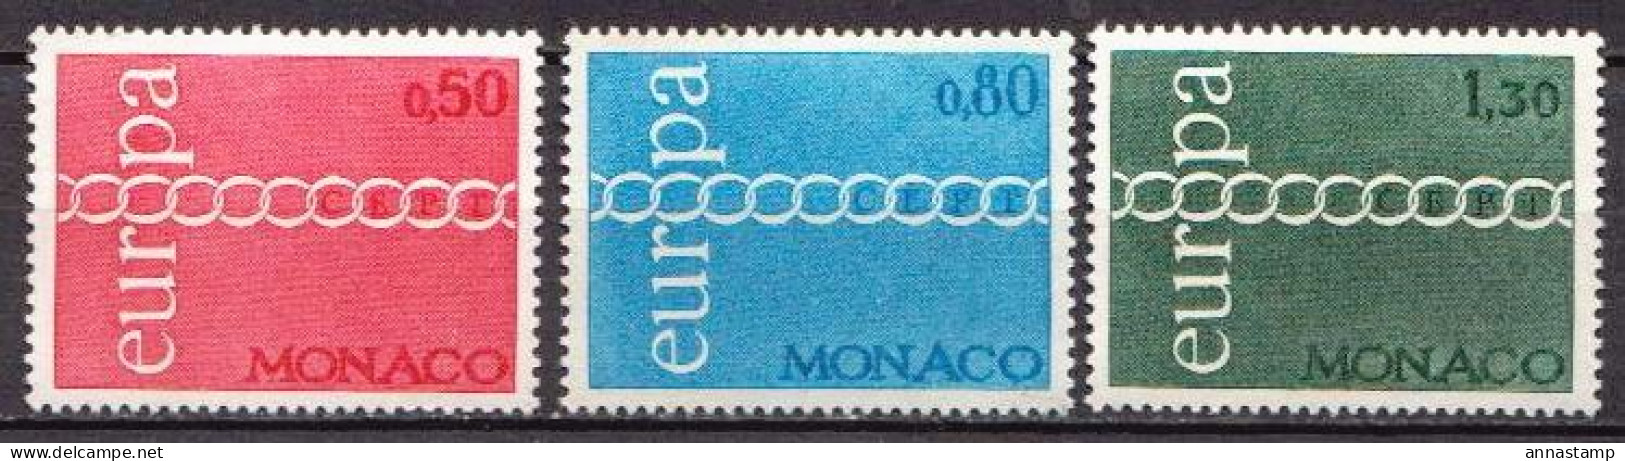 Monaco MNH Set - 1971